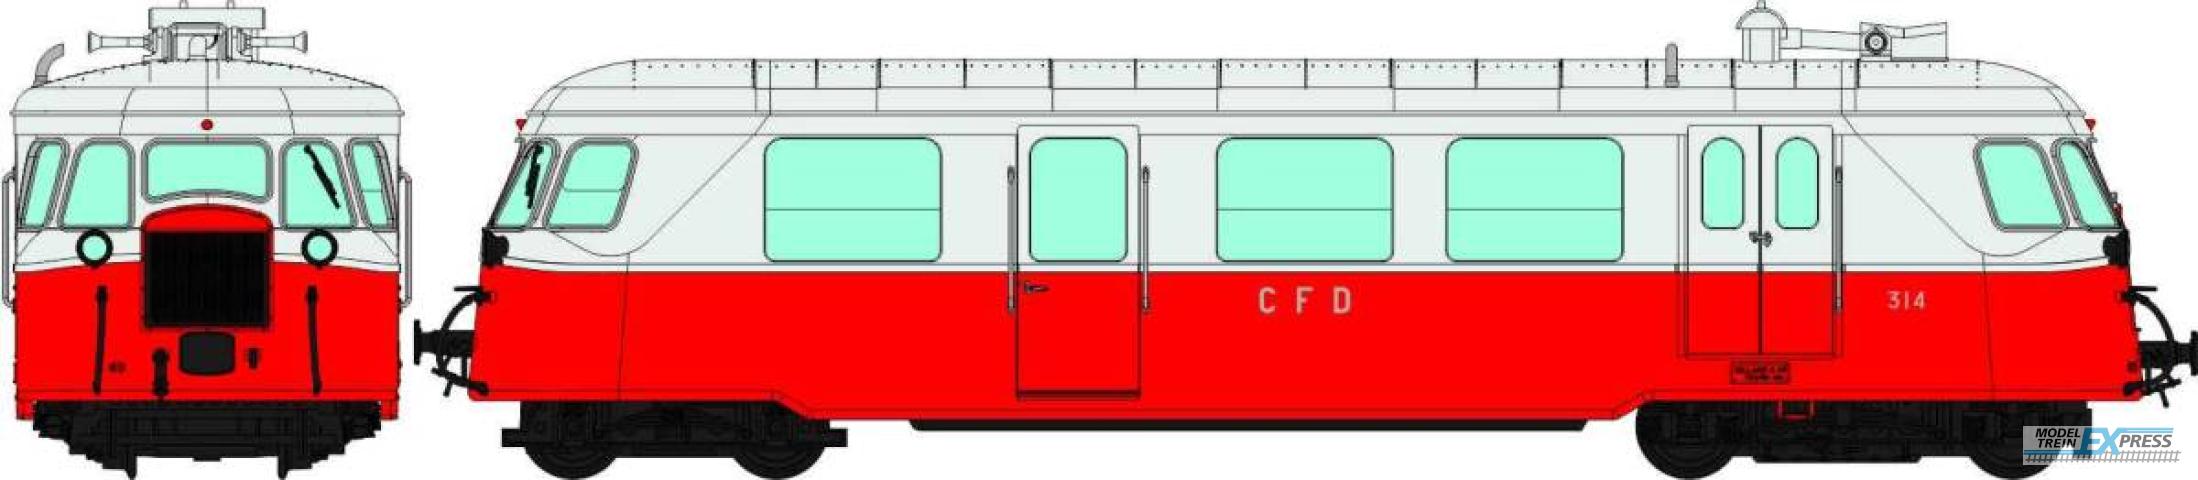 REE models VM-002S BILLARD Railcar CFD N°314, 2 Lights, Red/Cream Era III - DCC Sound